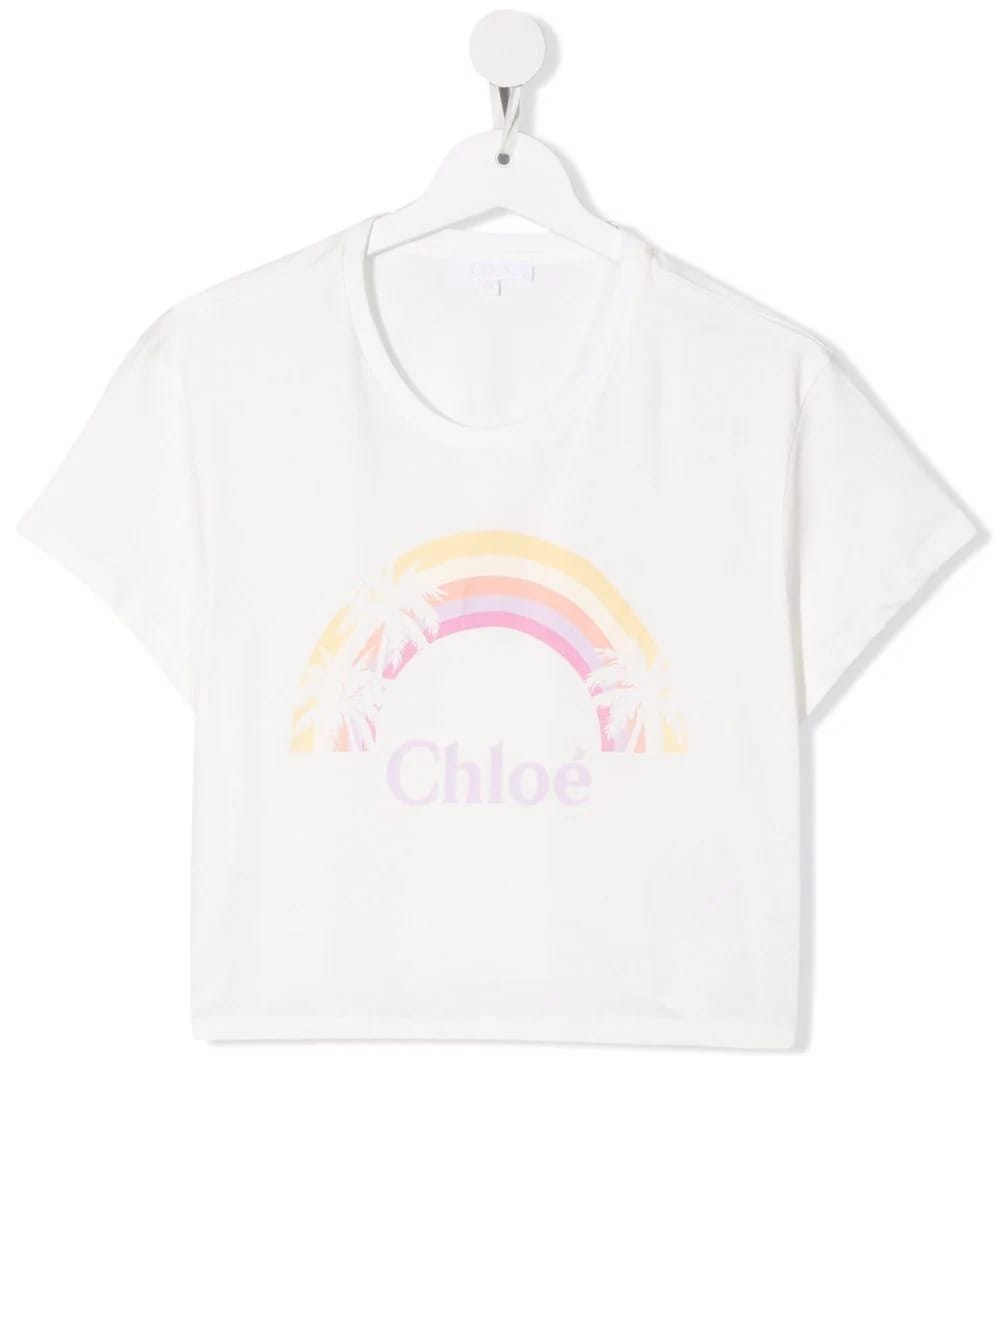 Chloé Kids White T-shirt With Rainbow Print And Chloe Logo